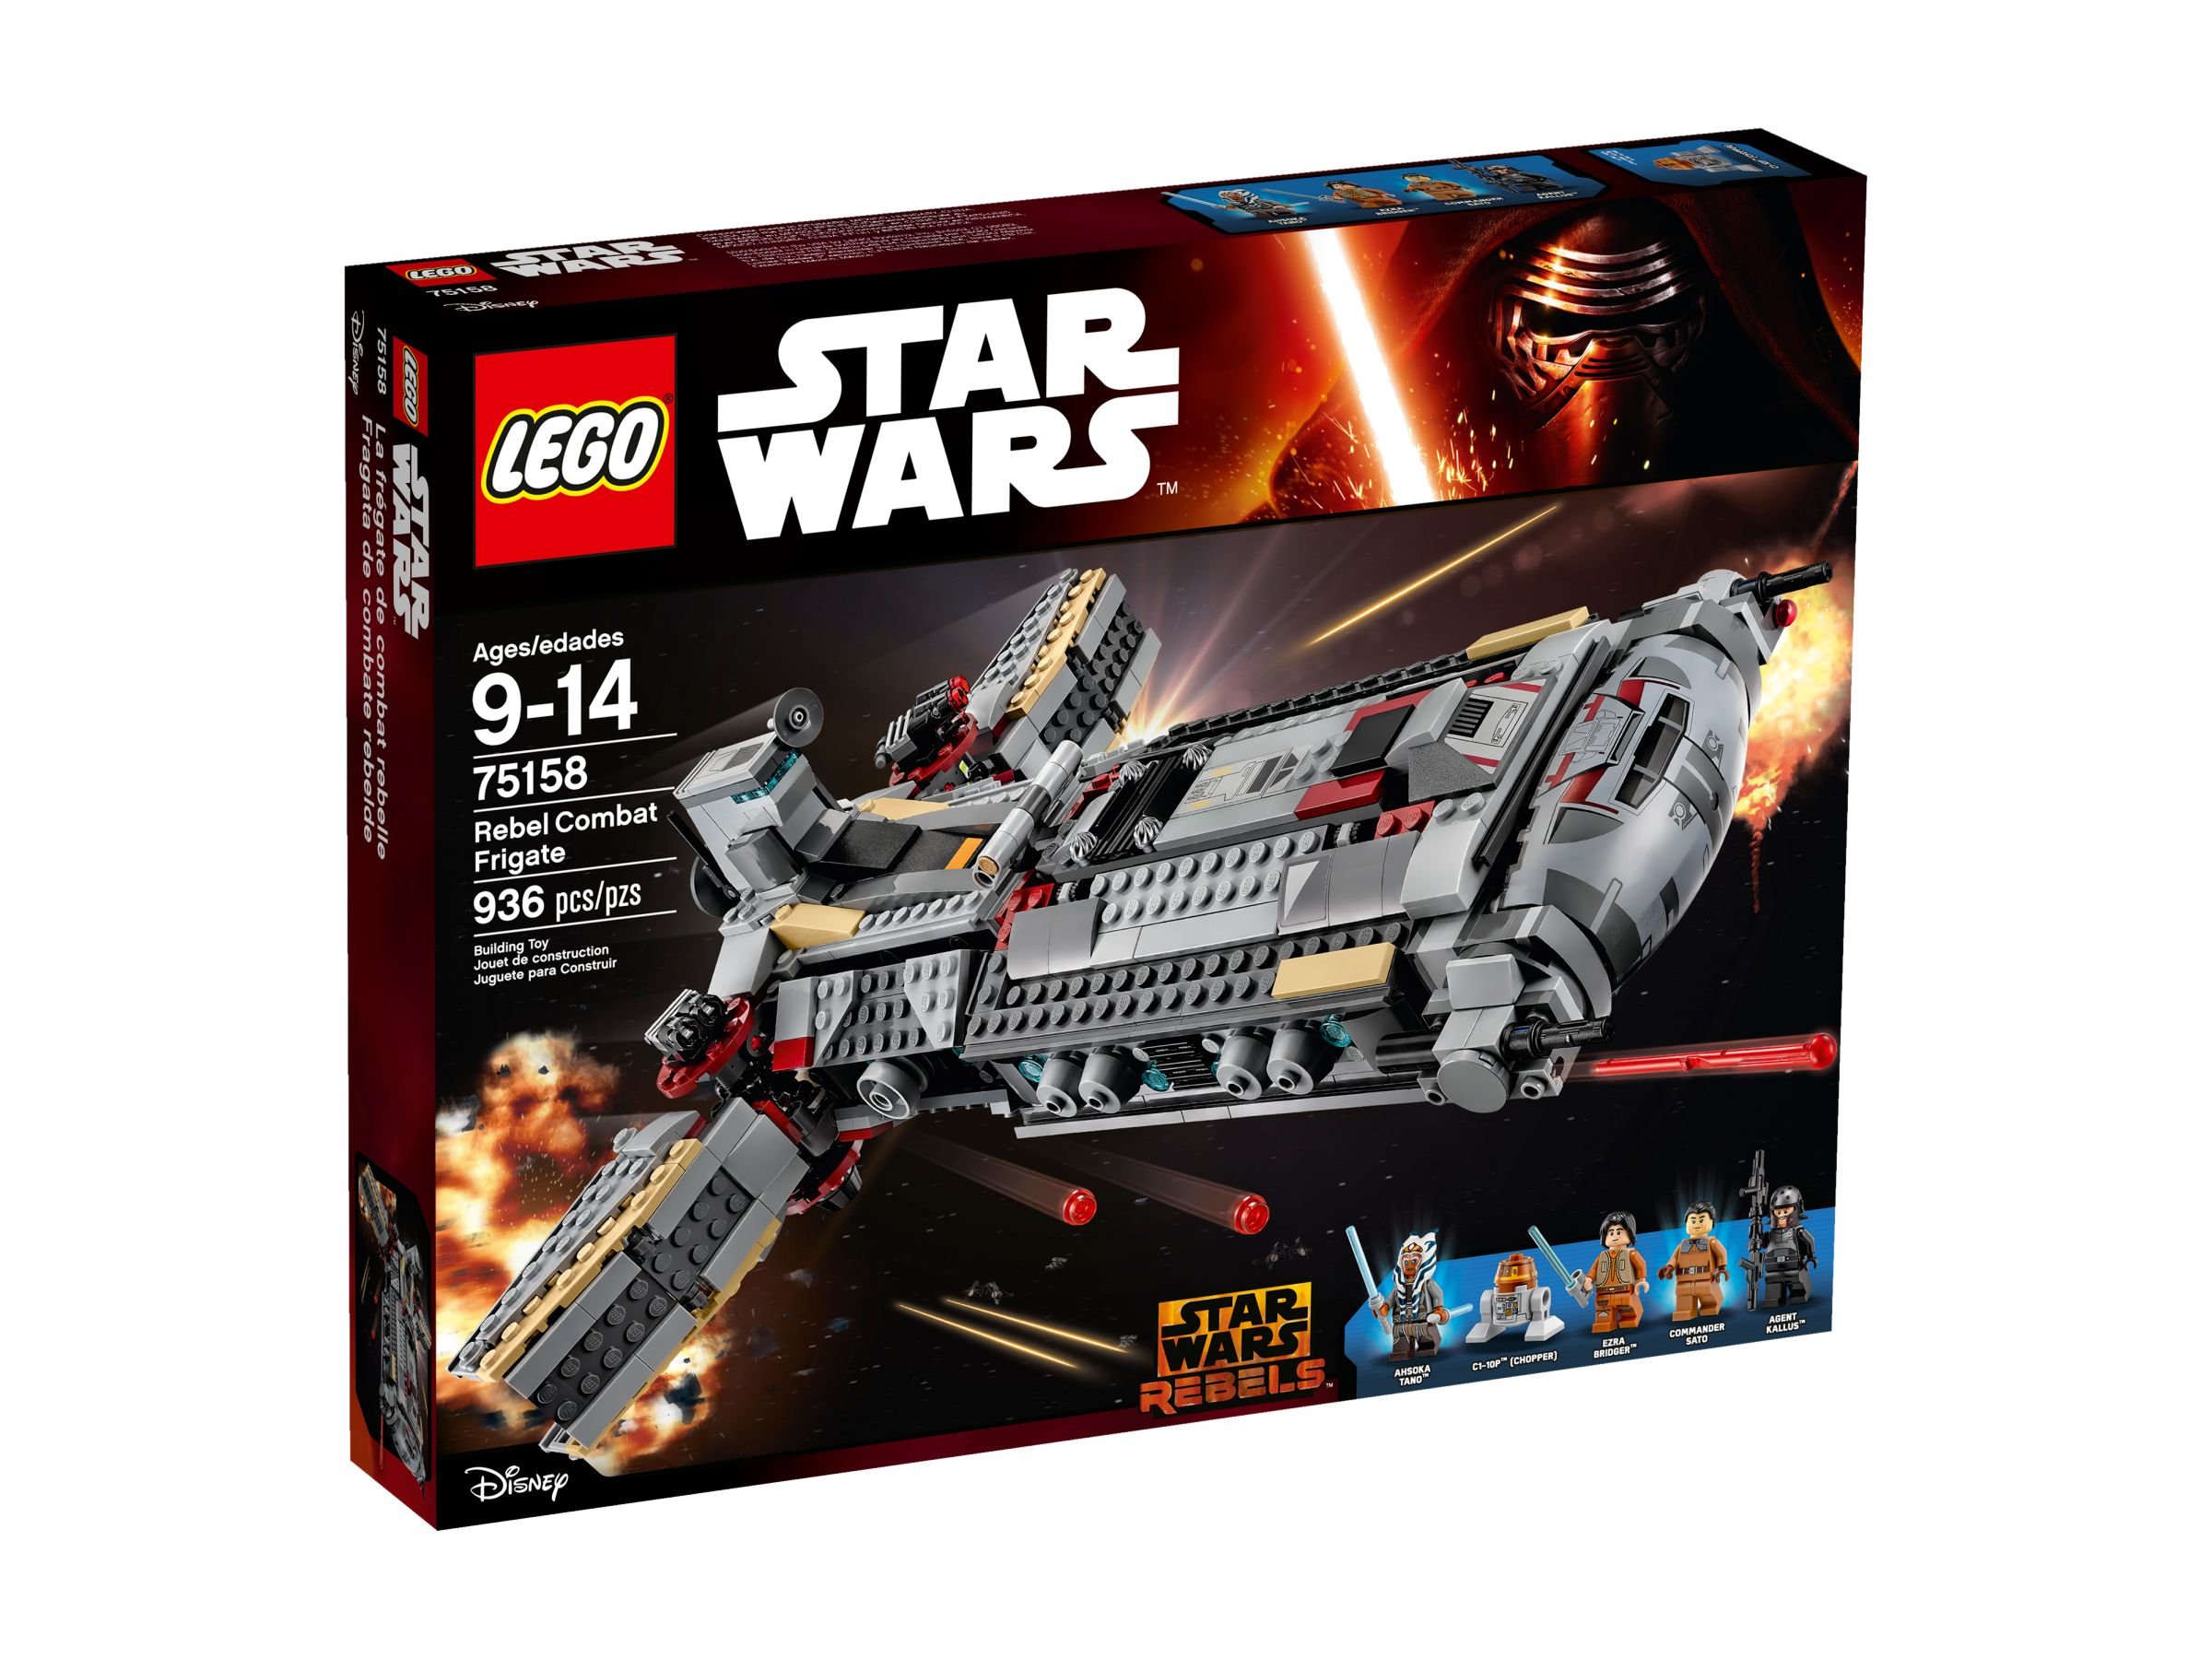 LEGO Star Wars 75158 Rebel Combat Frigate LEGO_75158_alt1.jpg